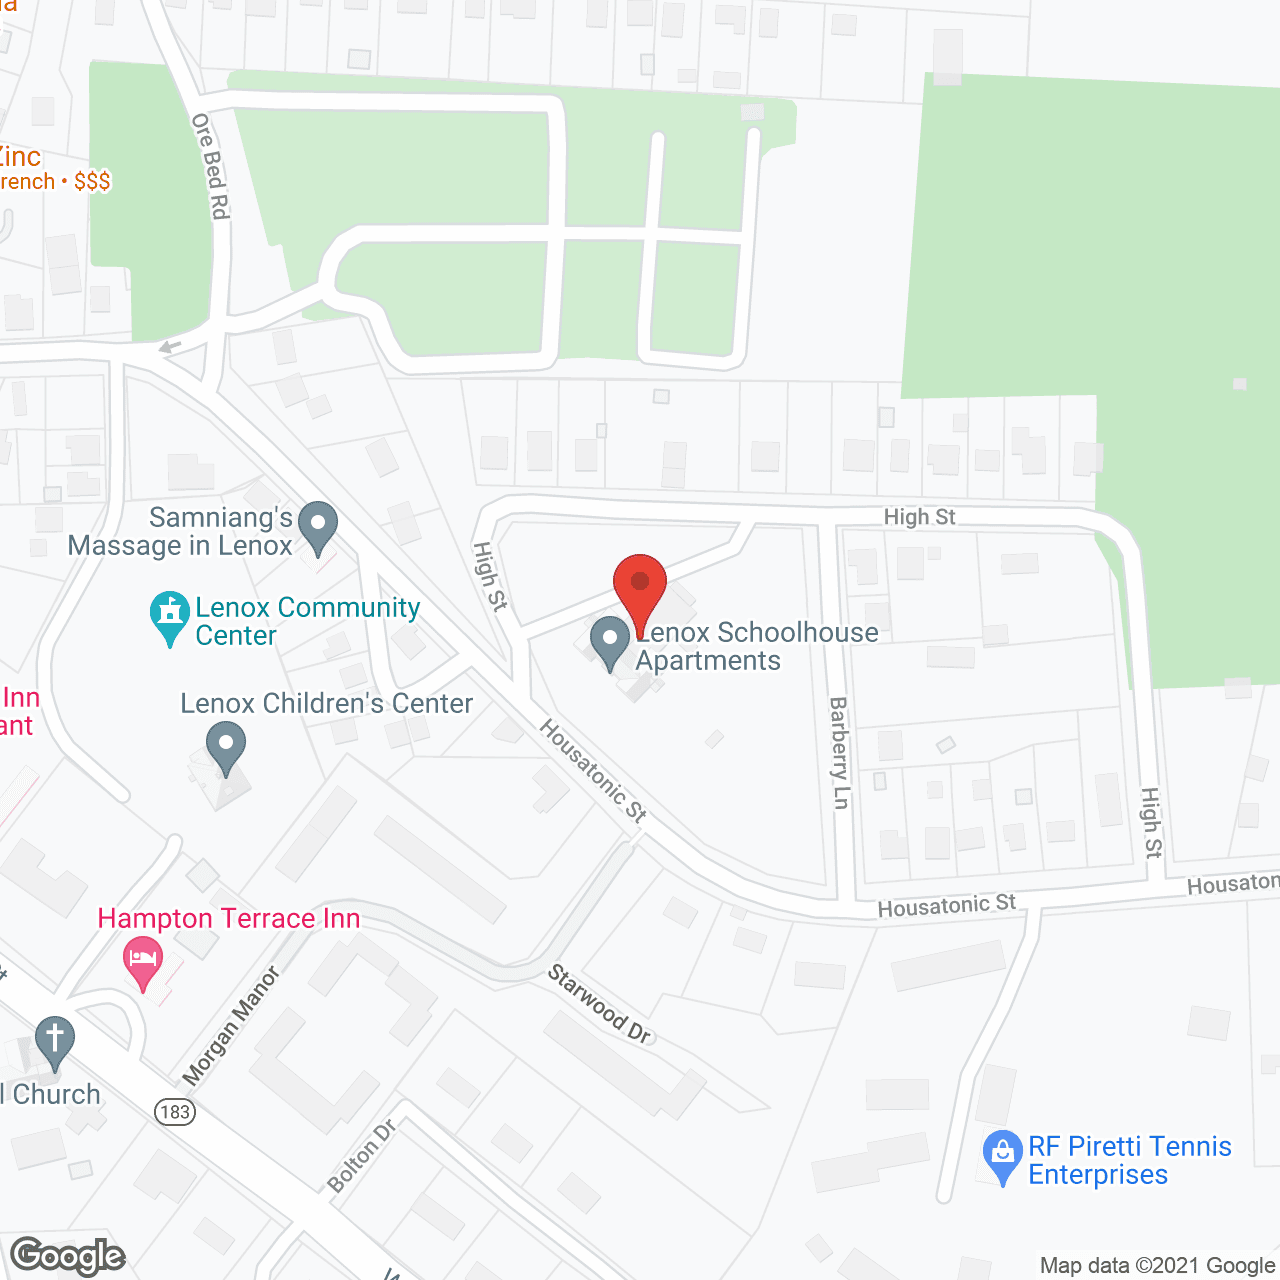 Lenox Schoolhouse Apartments in google map